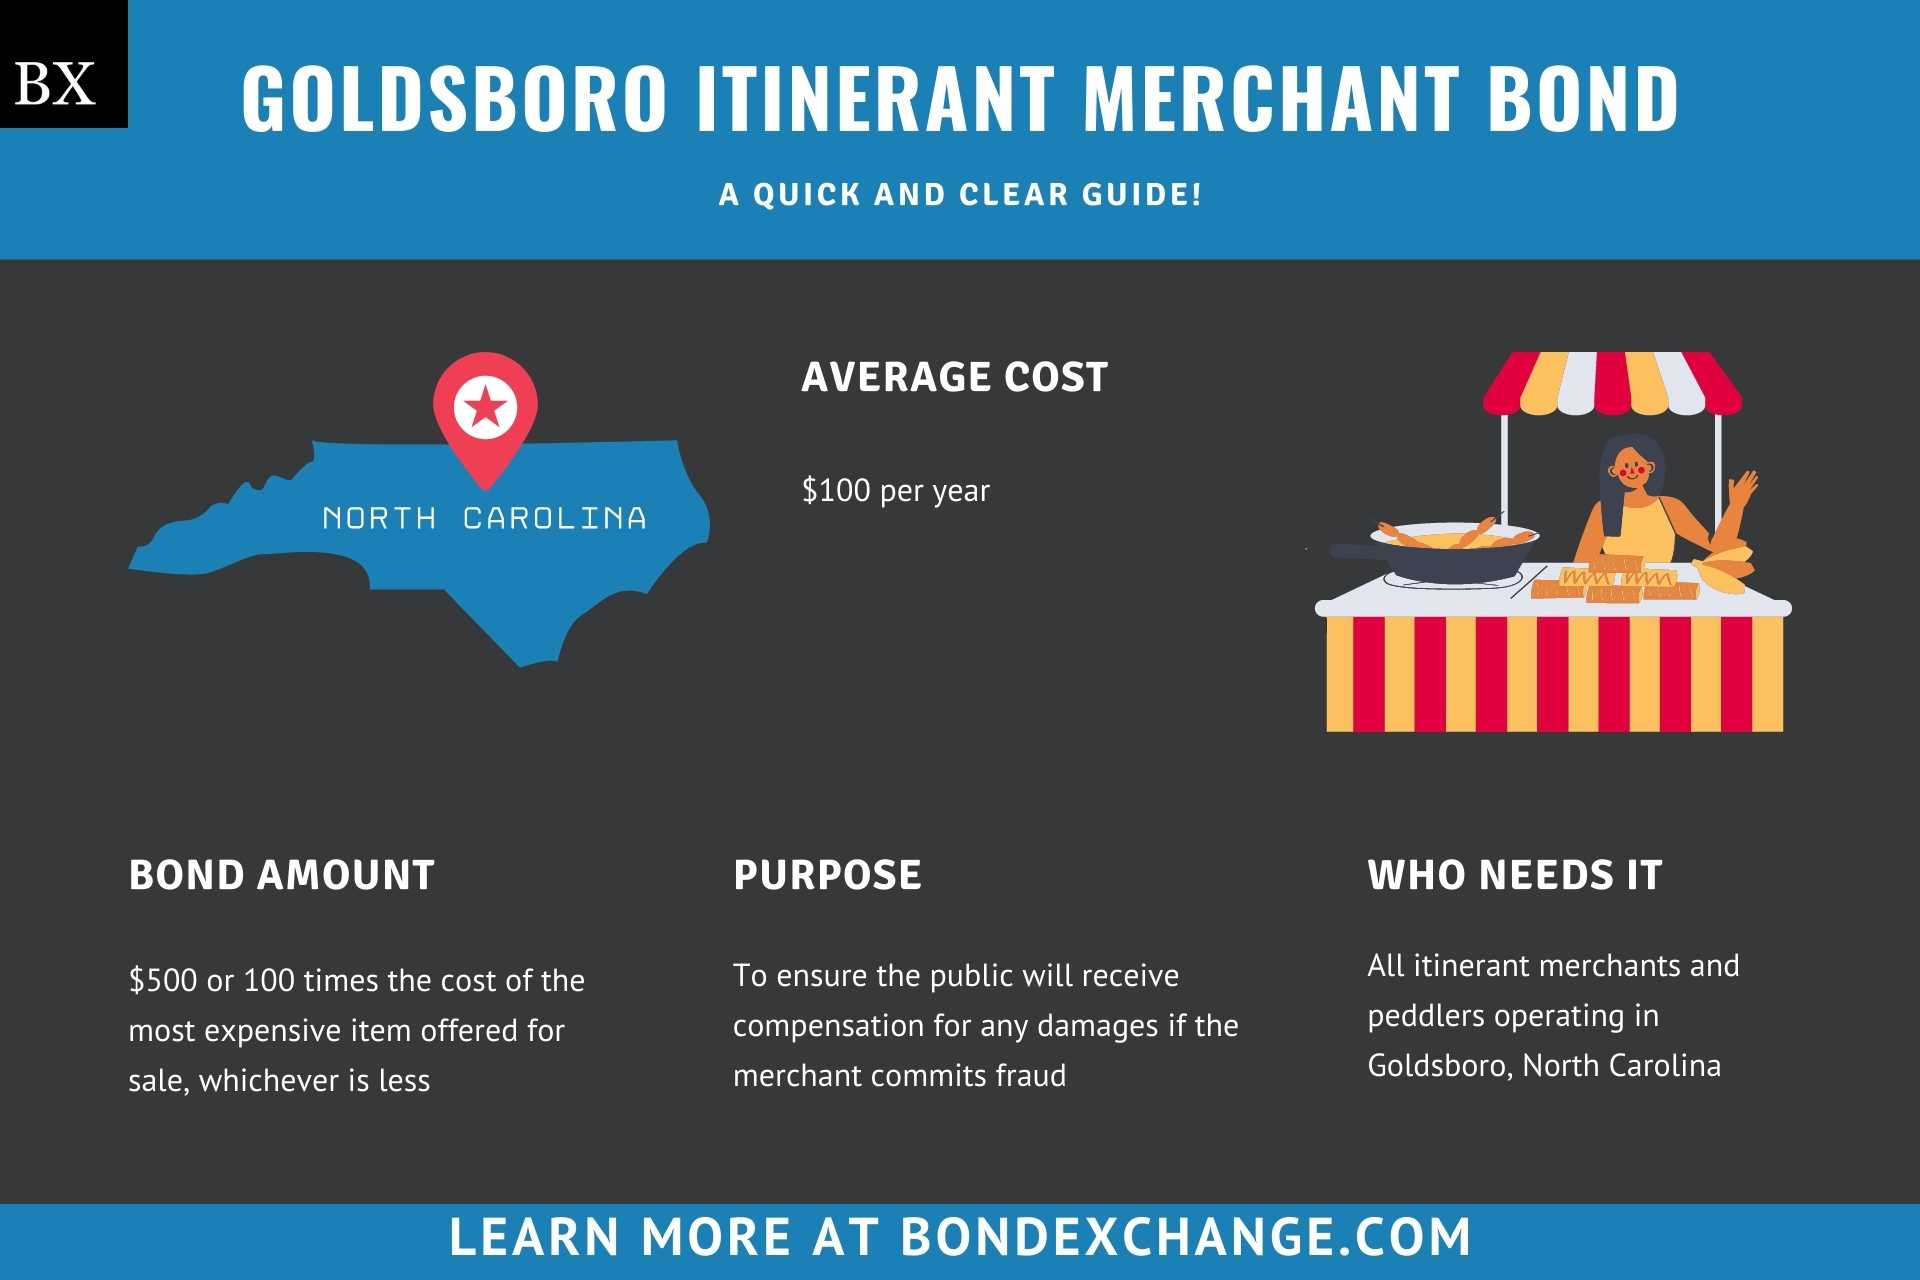 Goldsboro Itinerant Merchant Bond